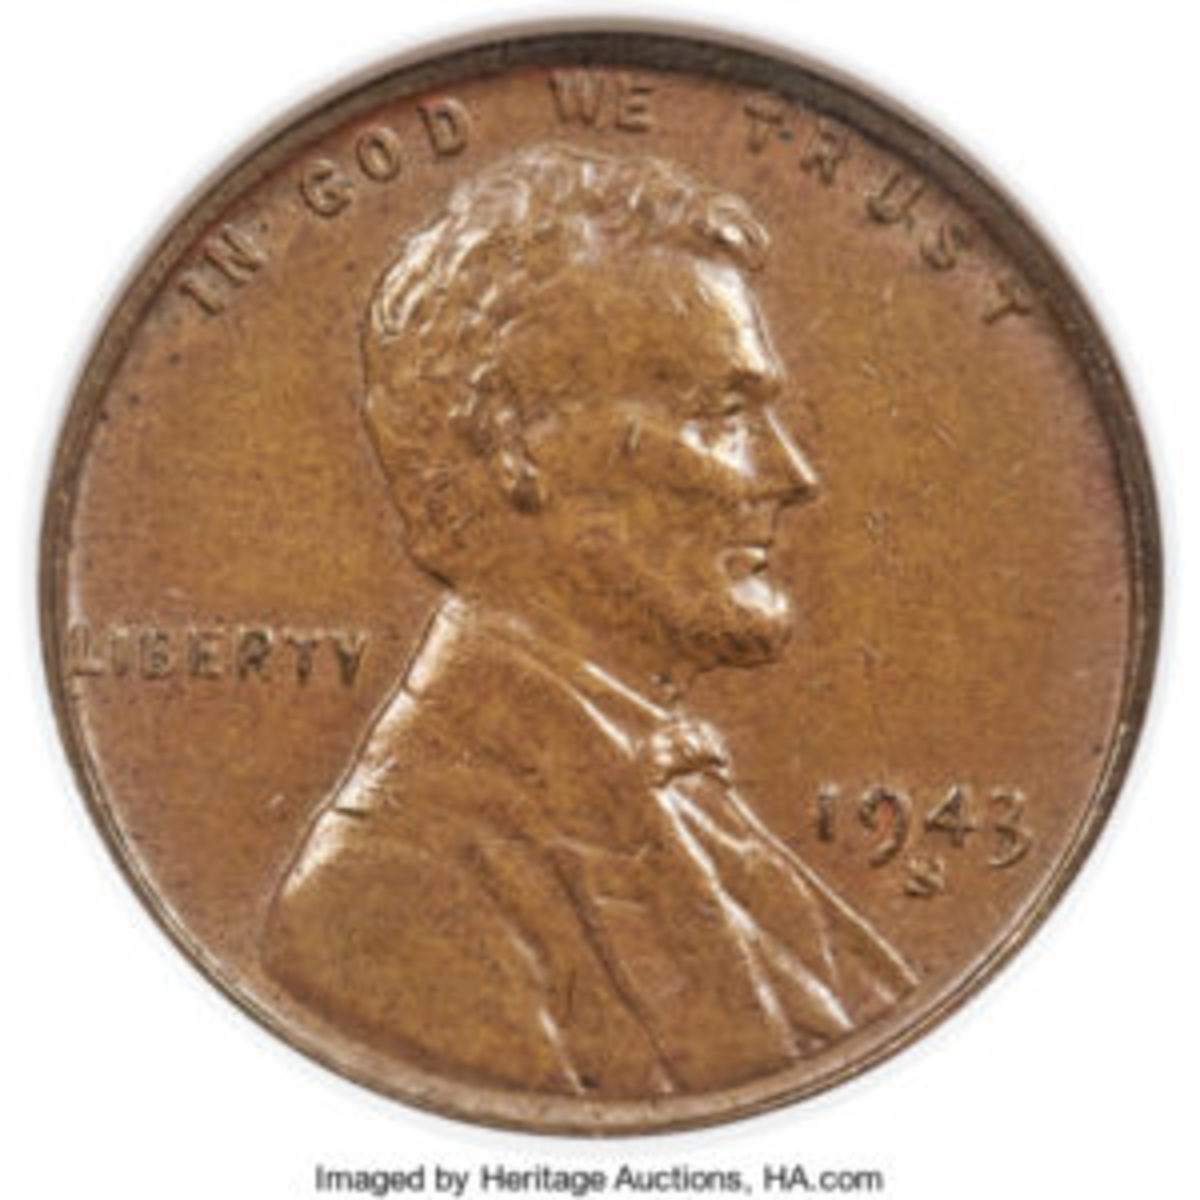 1943 'Copper' Cent